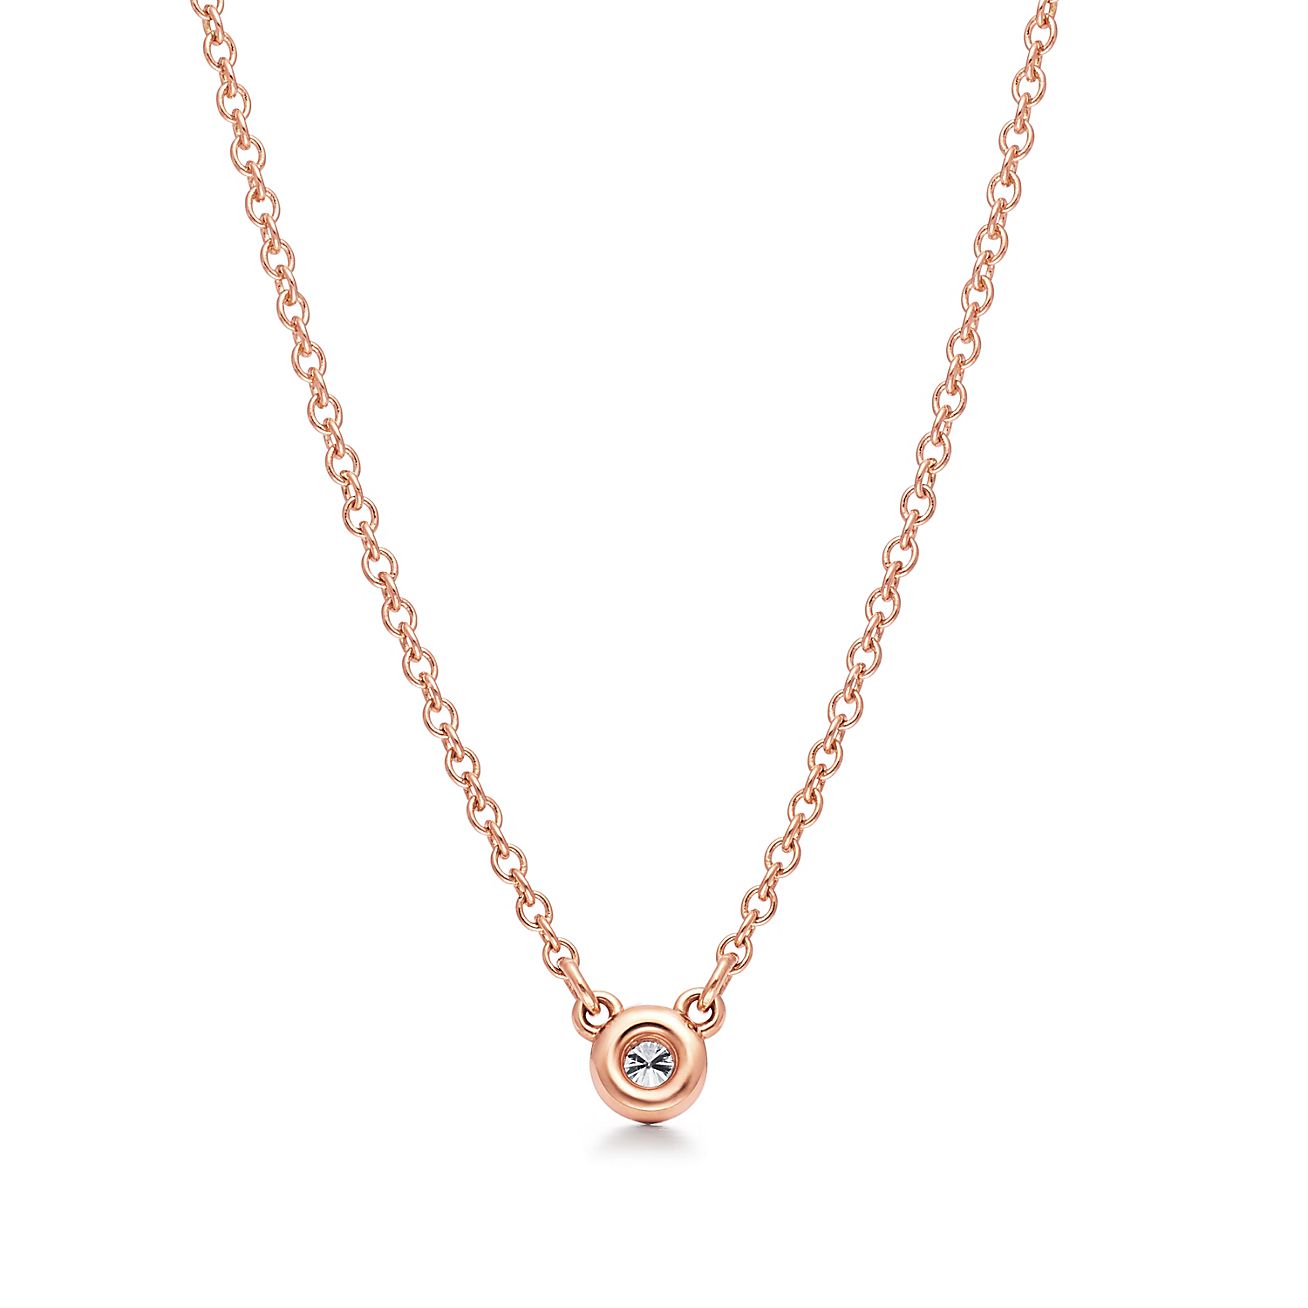 20 carat TW Diamond By Yard White Gold Necklace | Lauren B Jewelry